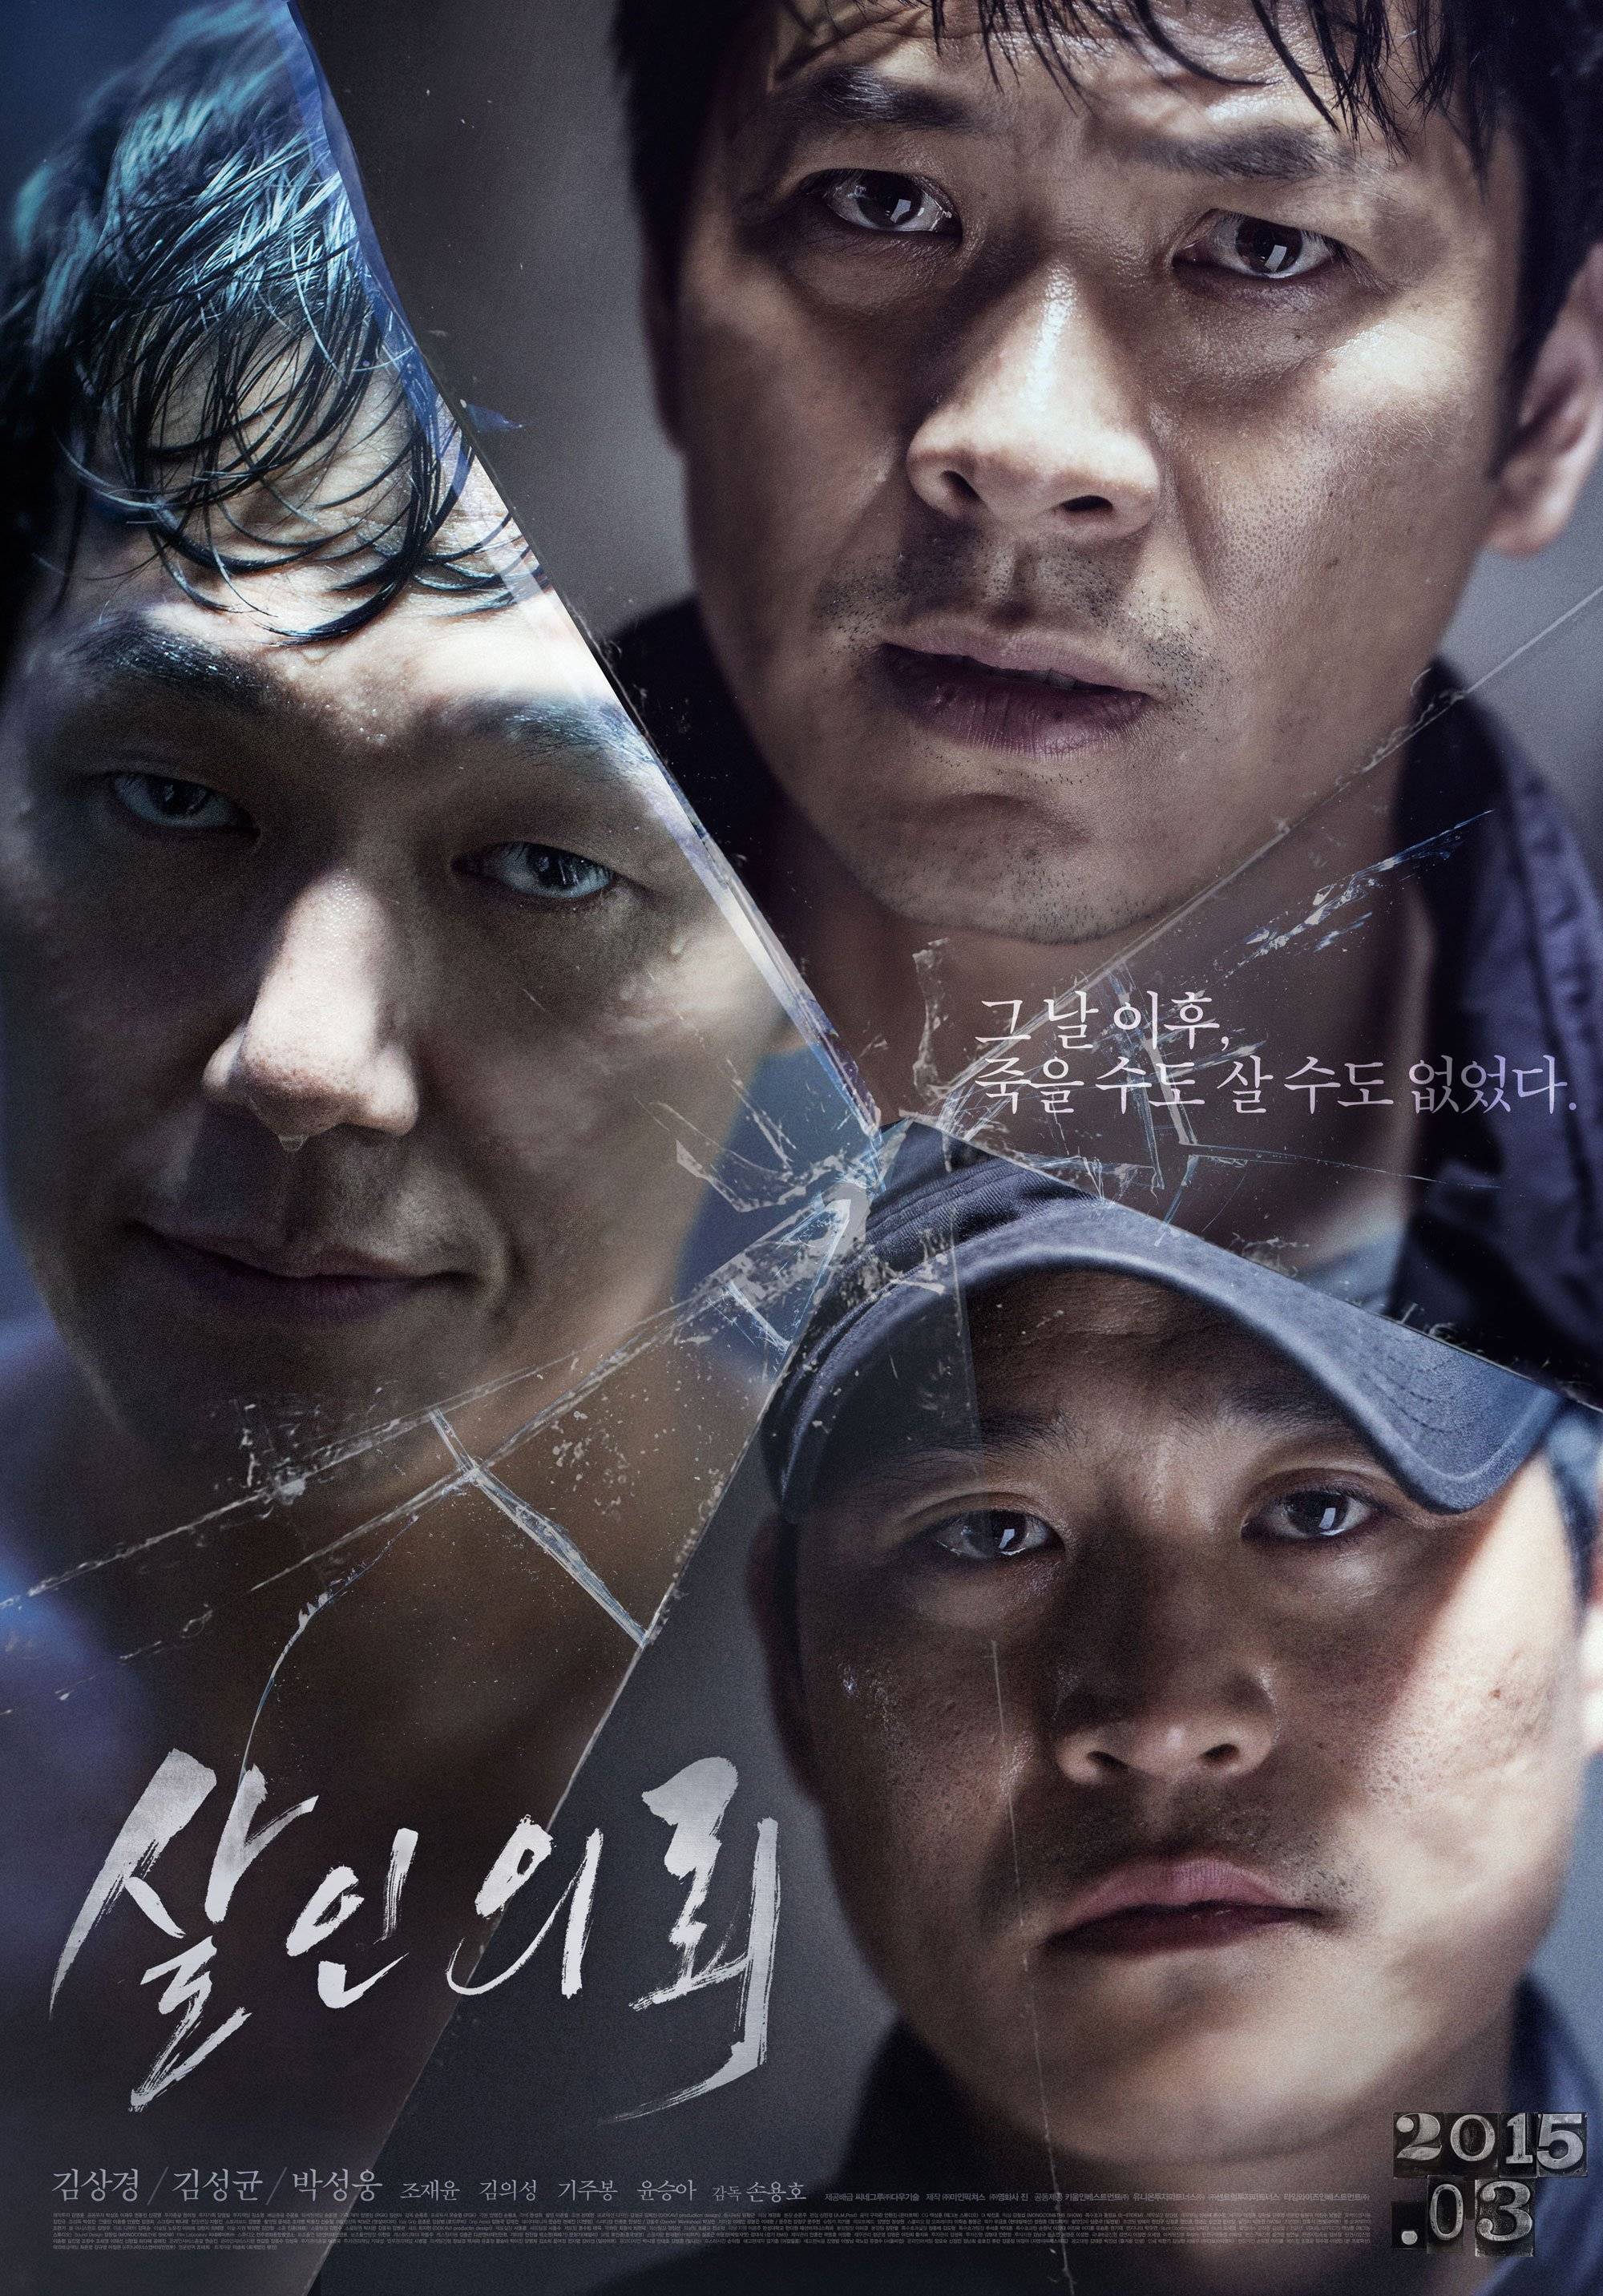 The Deal (살인의뢰) Movie Picture Gallery HanCinema The Korean